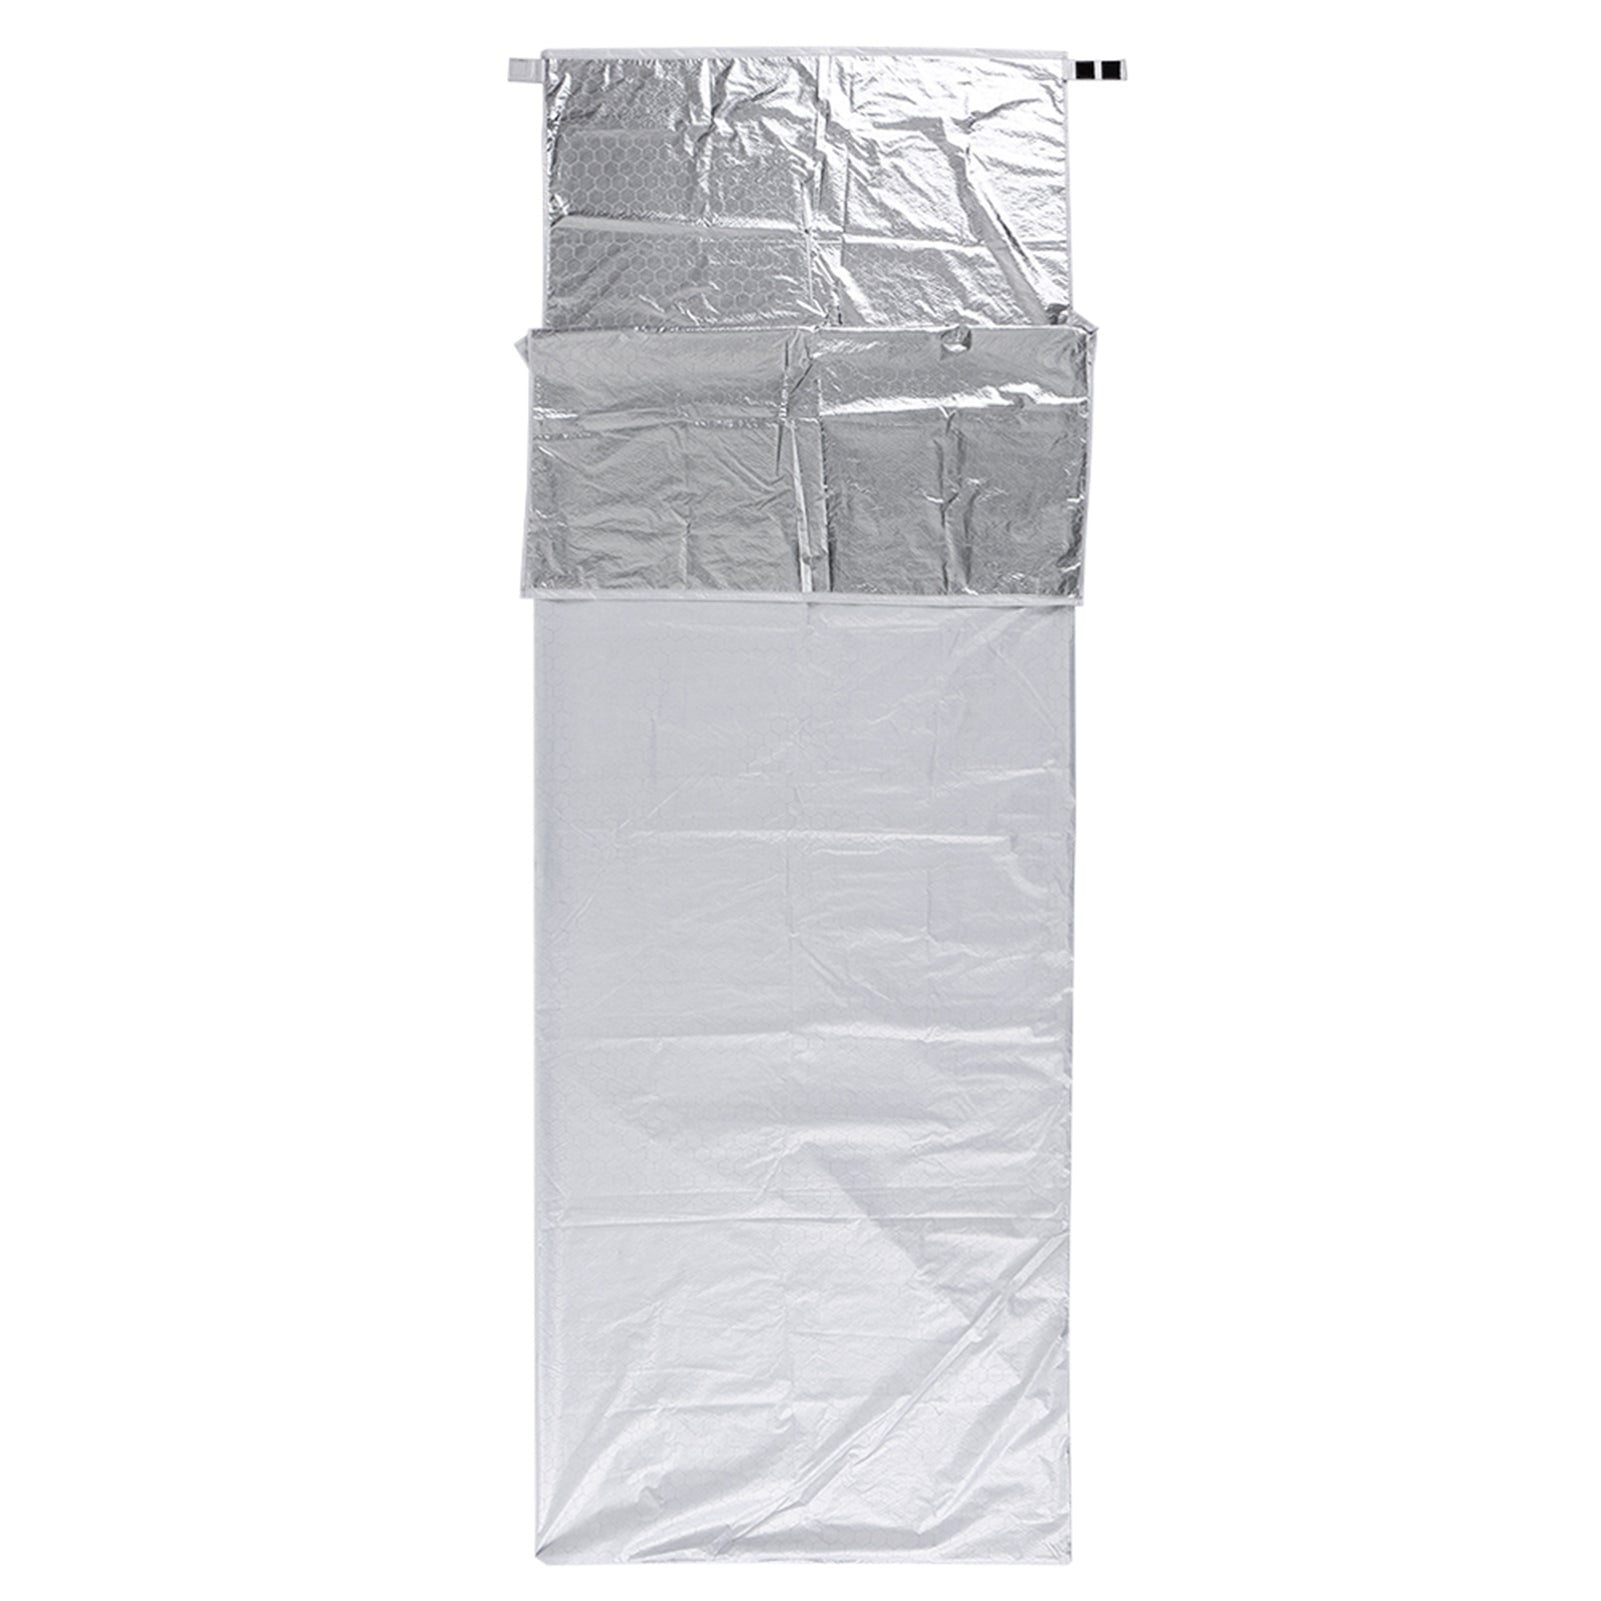 Anself Portable Warming Single Sleeping Bag Reflective Lock Outdoor Camping Travel Hiking Sleeping Bag